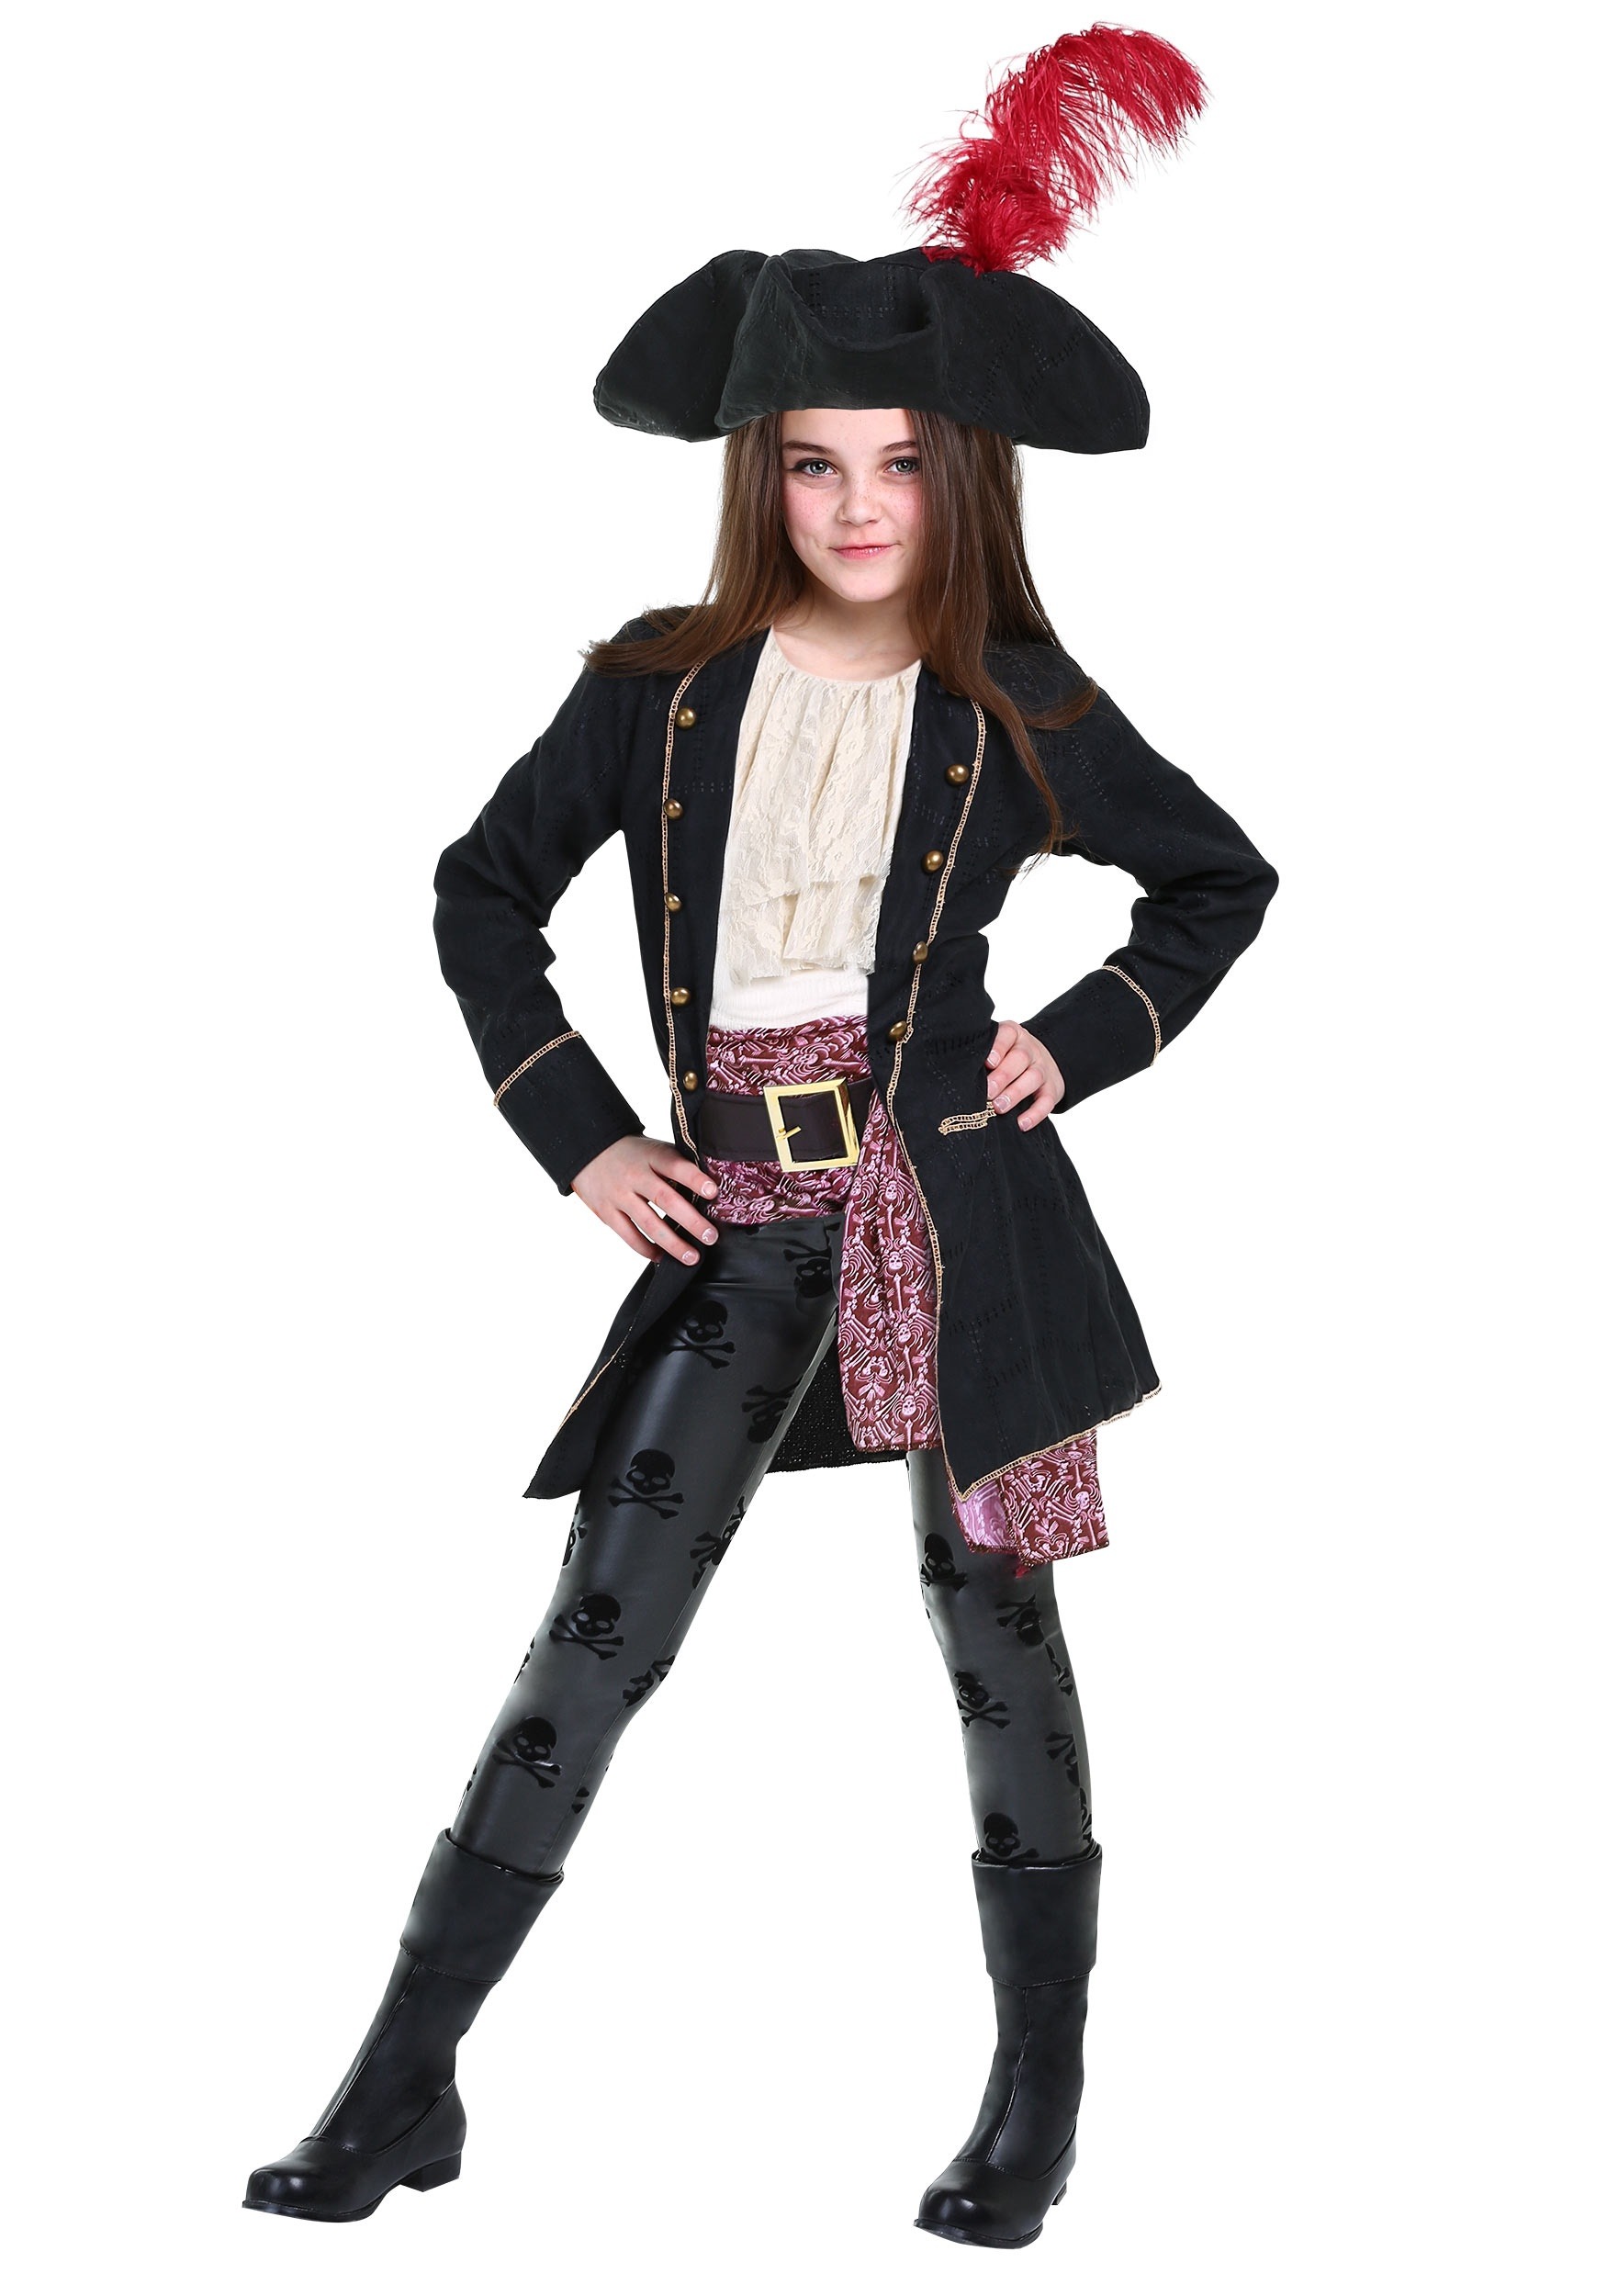 Photos - Fancy Dress FUN Costumes Buccaneer Costume for Girls | Pirate Costumes Black/Beige